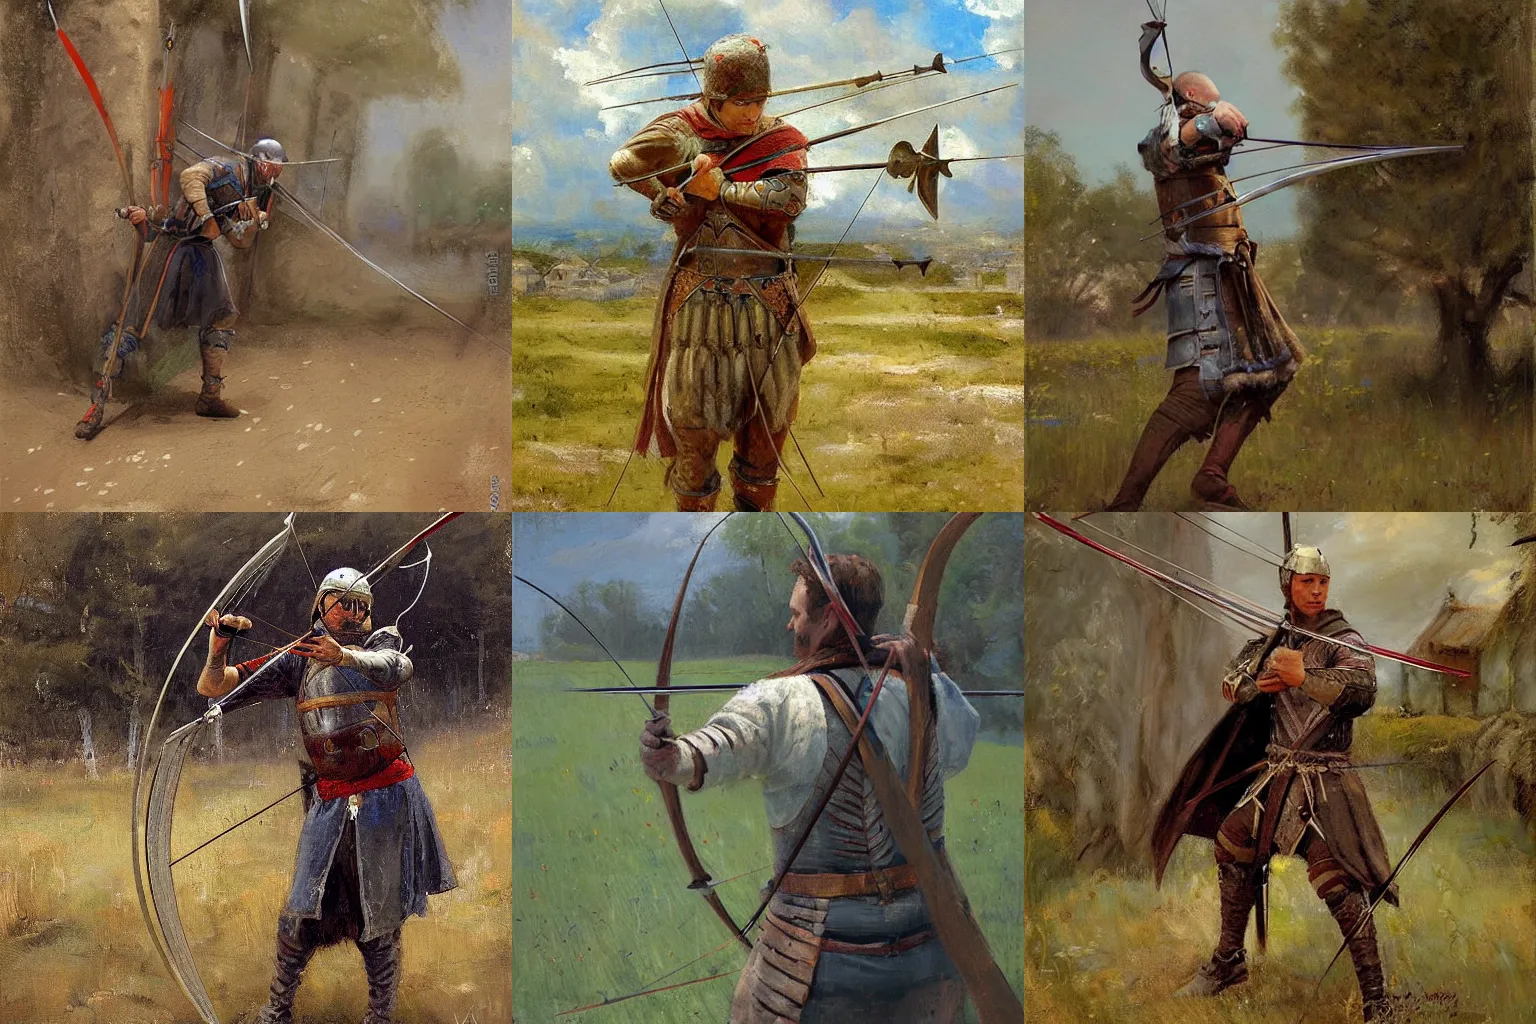 Prompt: medieval archer by richard schmid